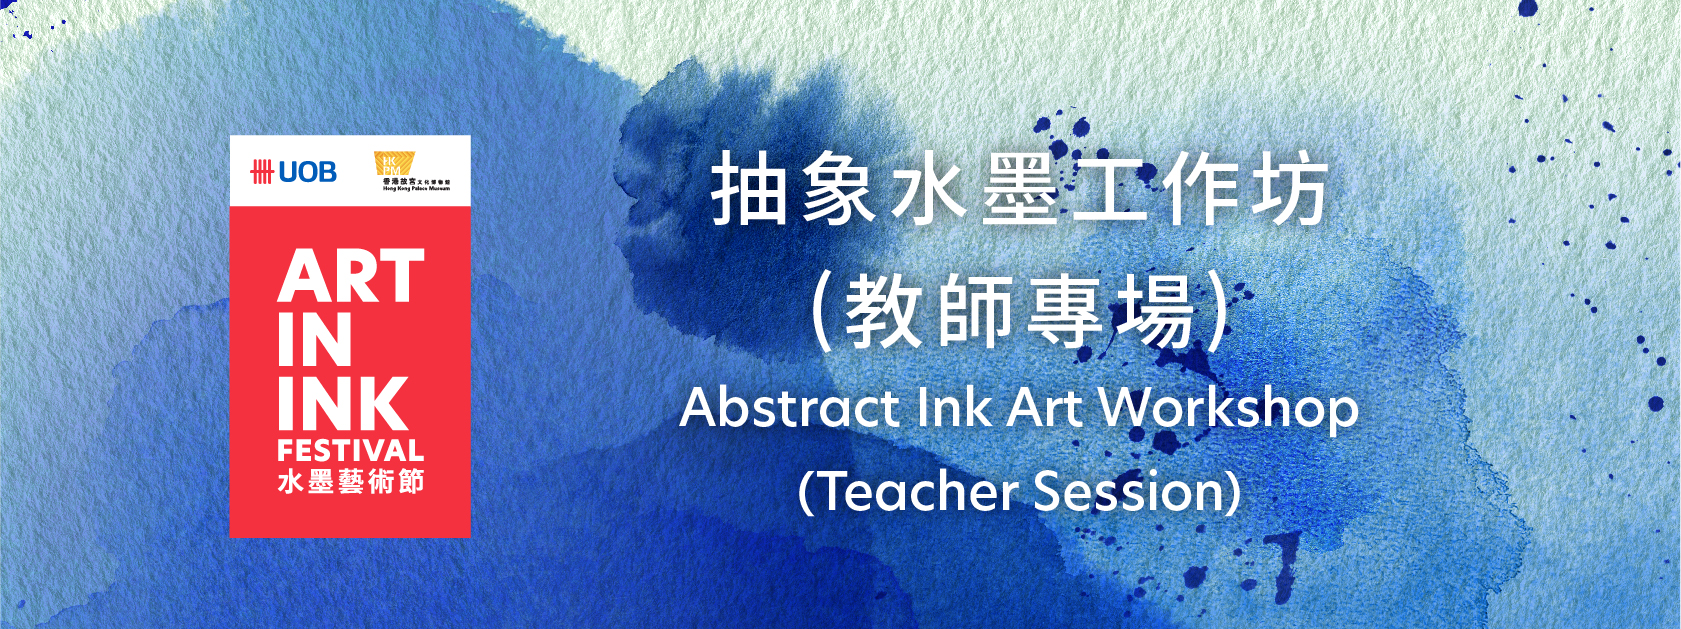 Abstract Ink Art Workshop (Teacher Session)